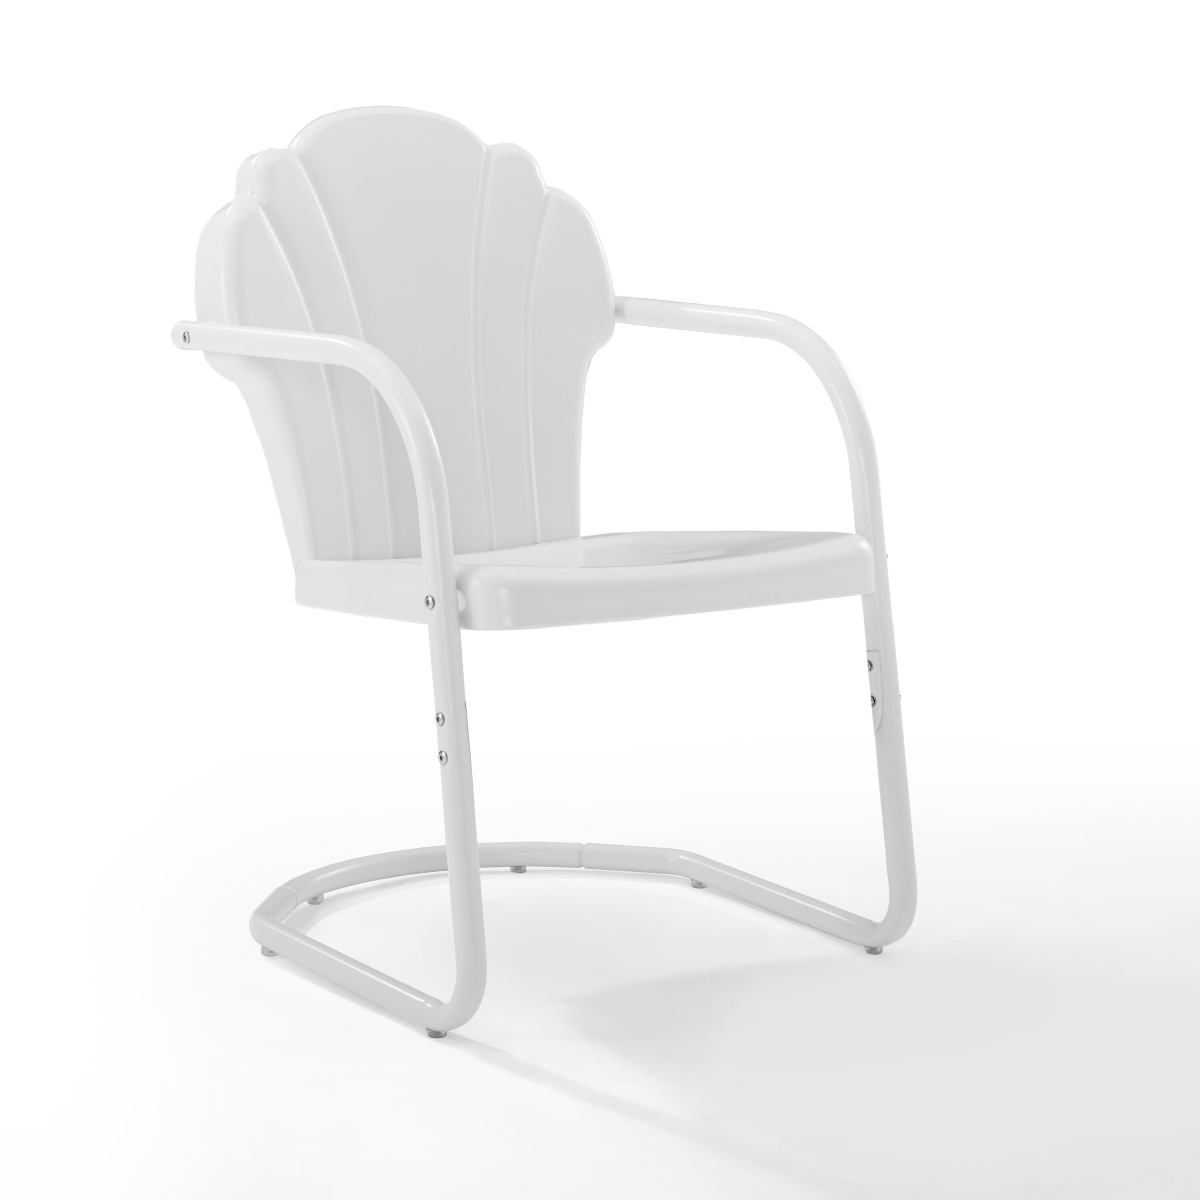 Picture of Crosley Furniture CO1029-WH Tulip Retro Metal Chair, White Satin - 33 x 24.5 x 20.5 in.